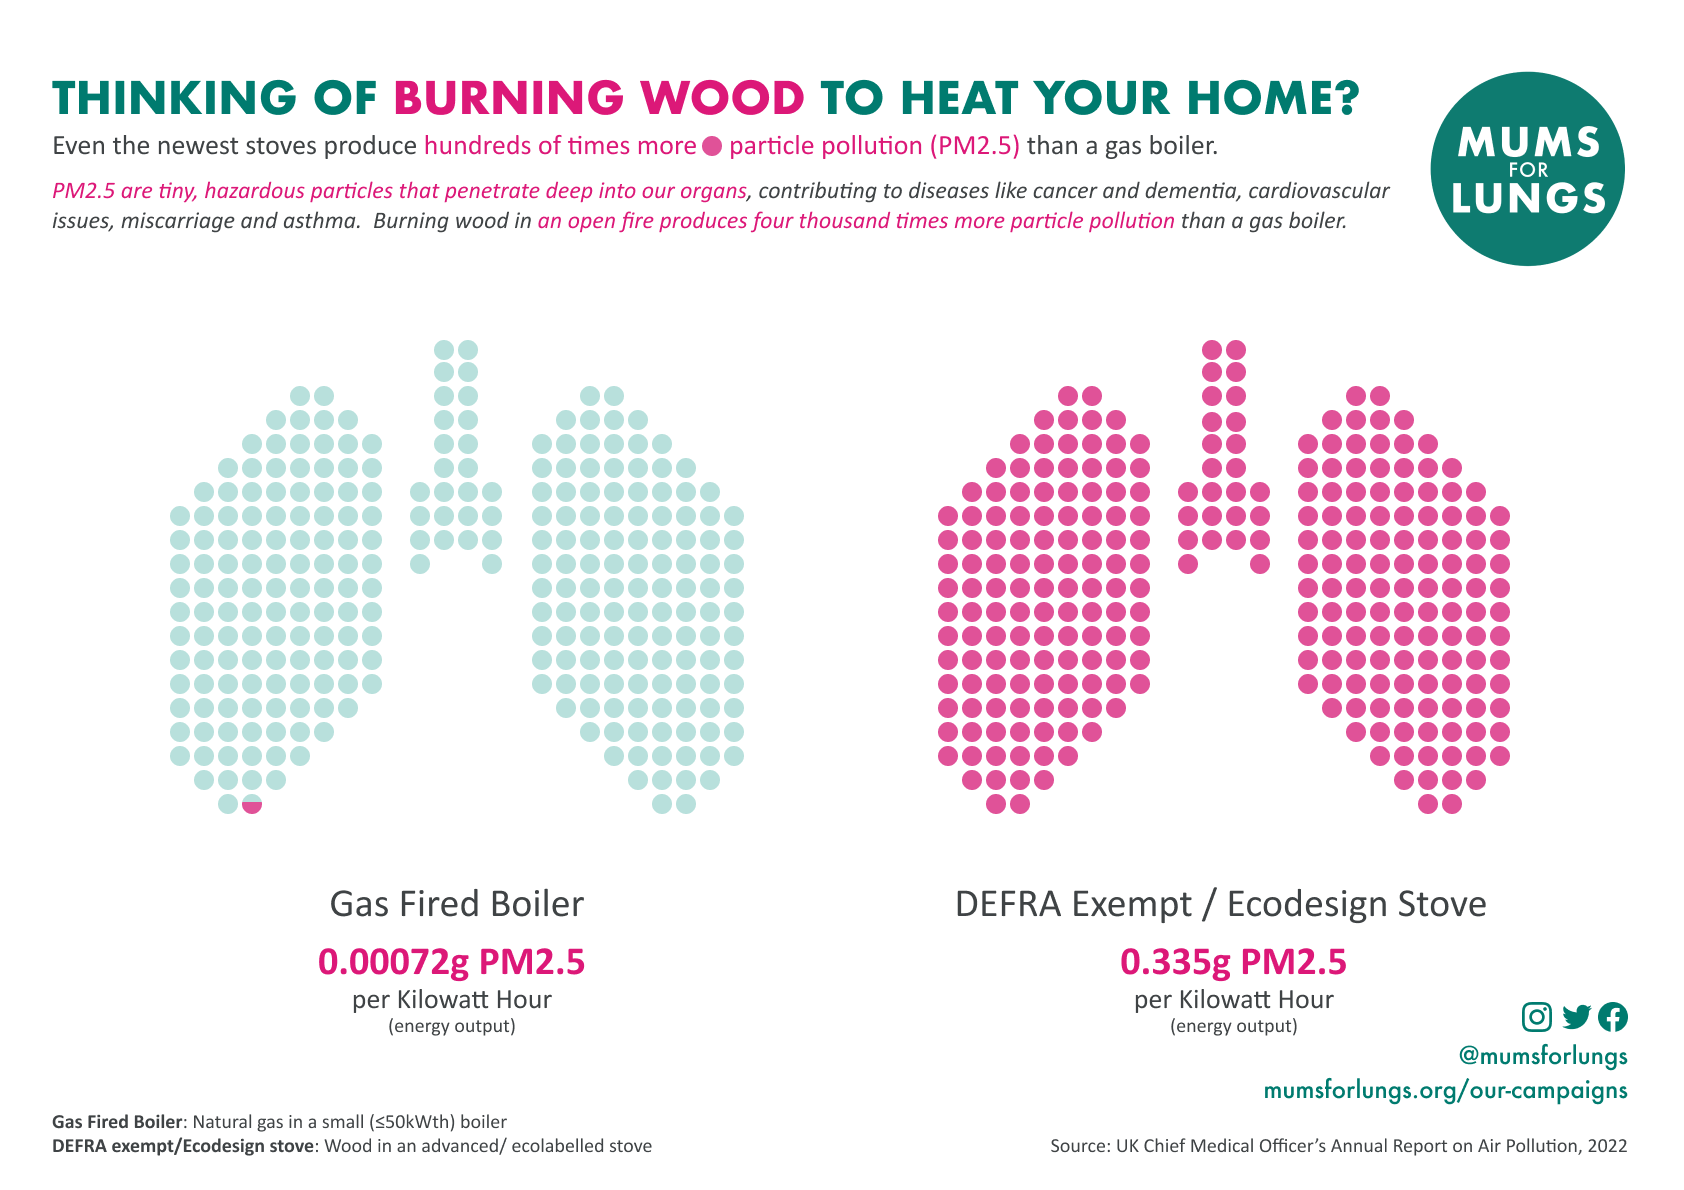 Comparison of Wood Burning Methods